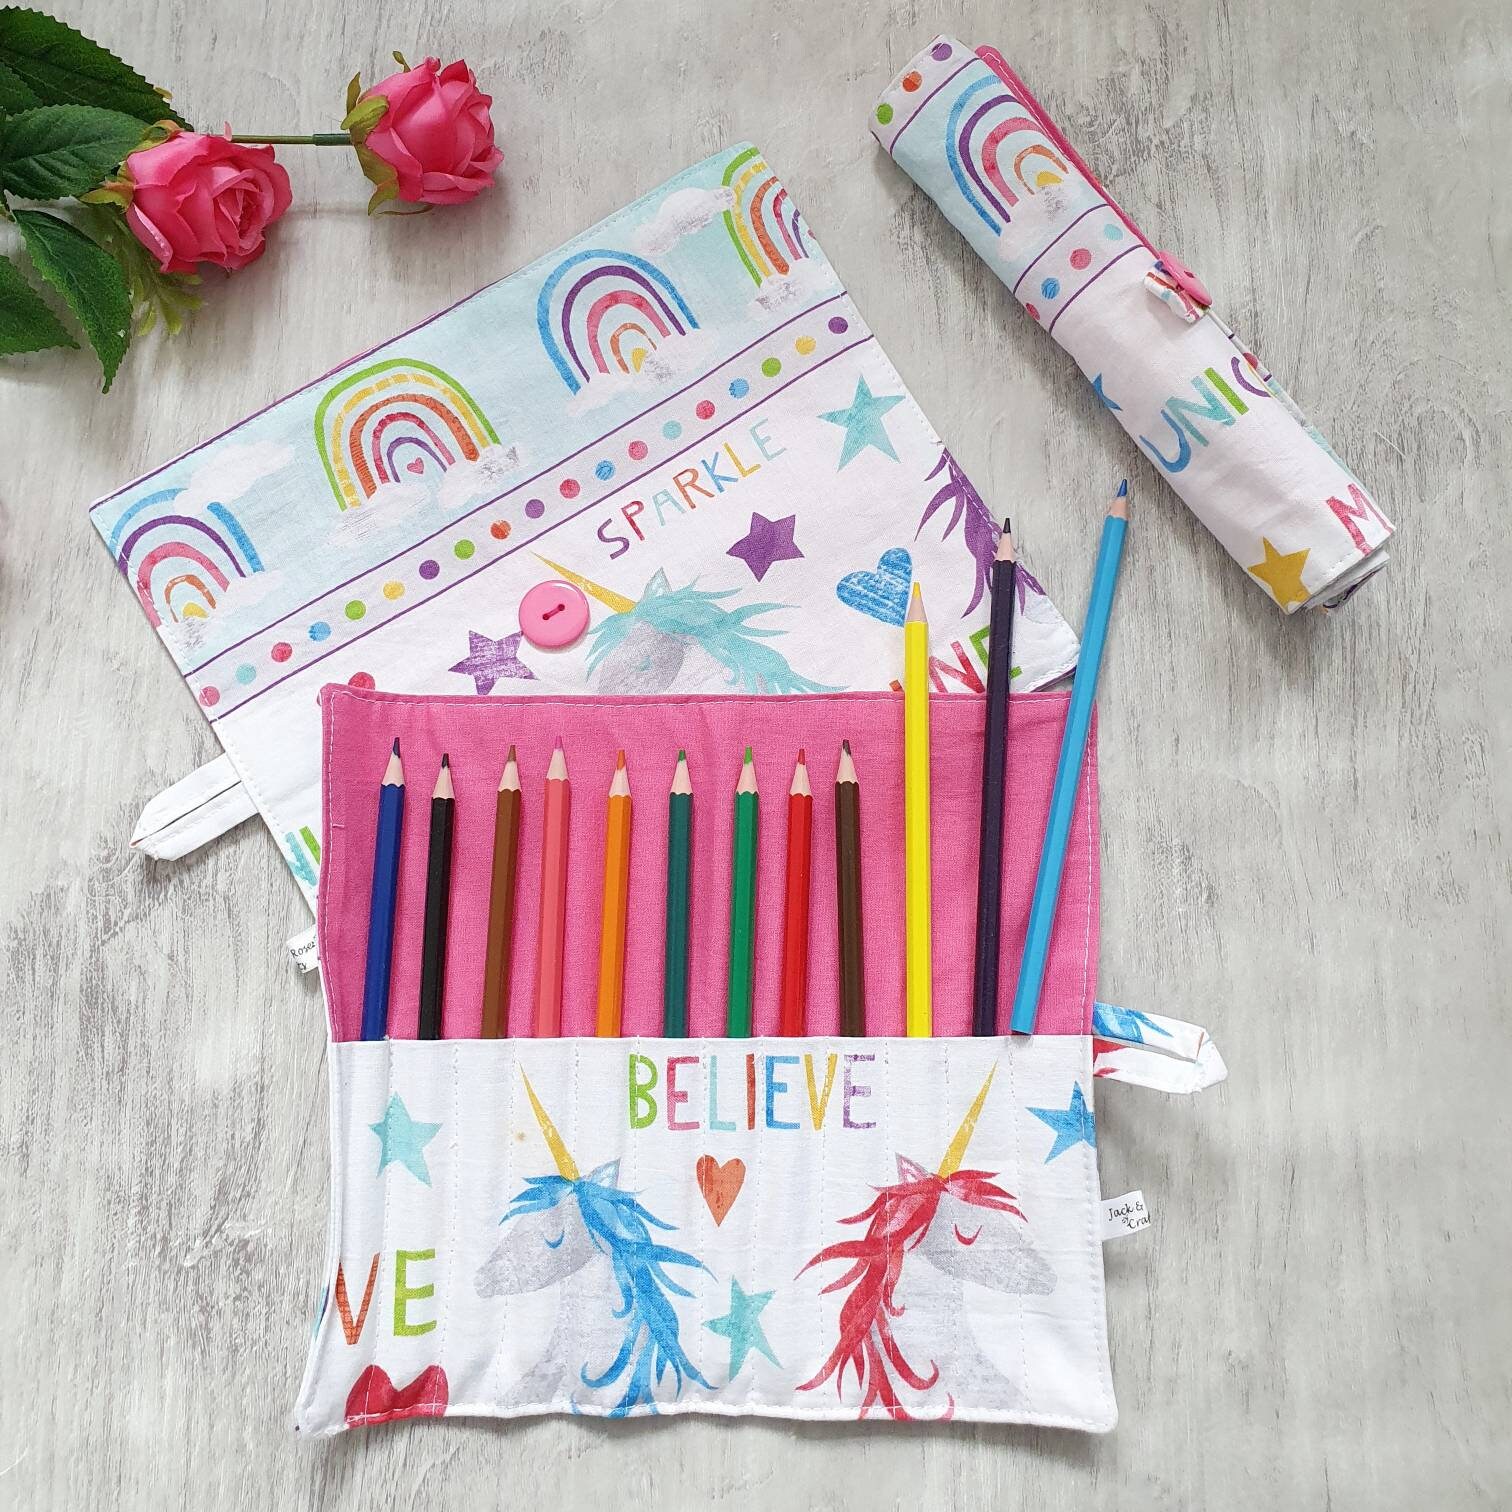 Custom Pencil Roll, Pencil Case, Pencil Wrap, Child Pencil Roll, Fabric  Pencil Case, Gift, Rainbow, Valentines, Easter, Birthday, Artist 